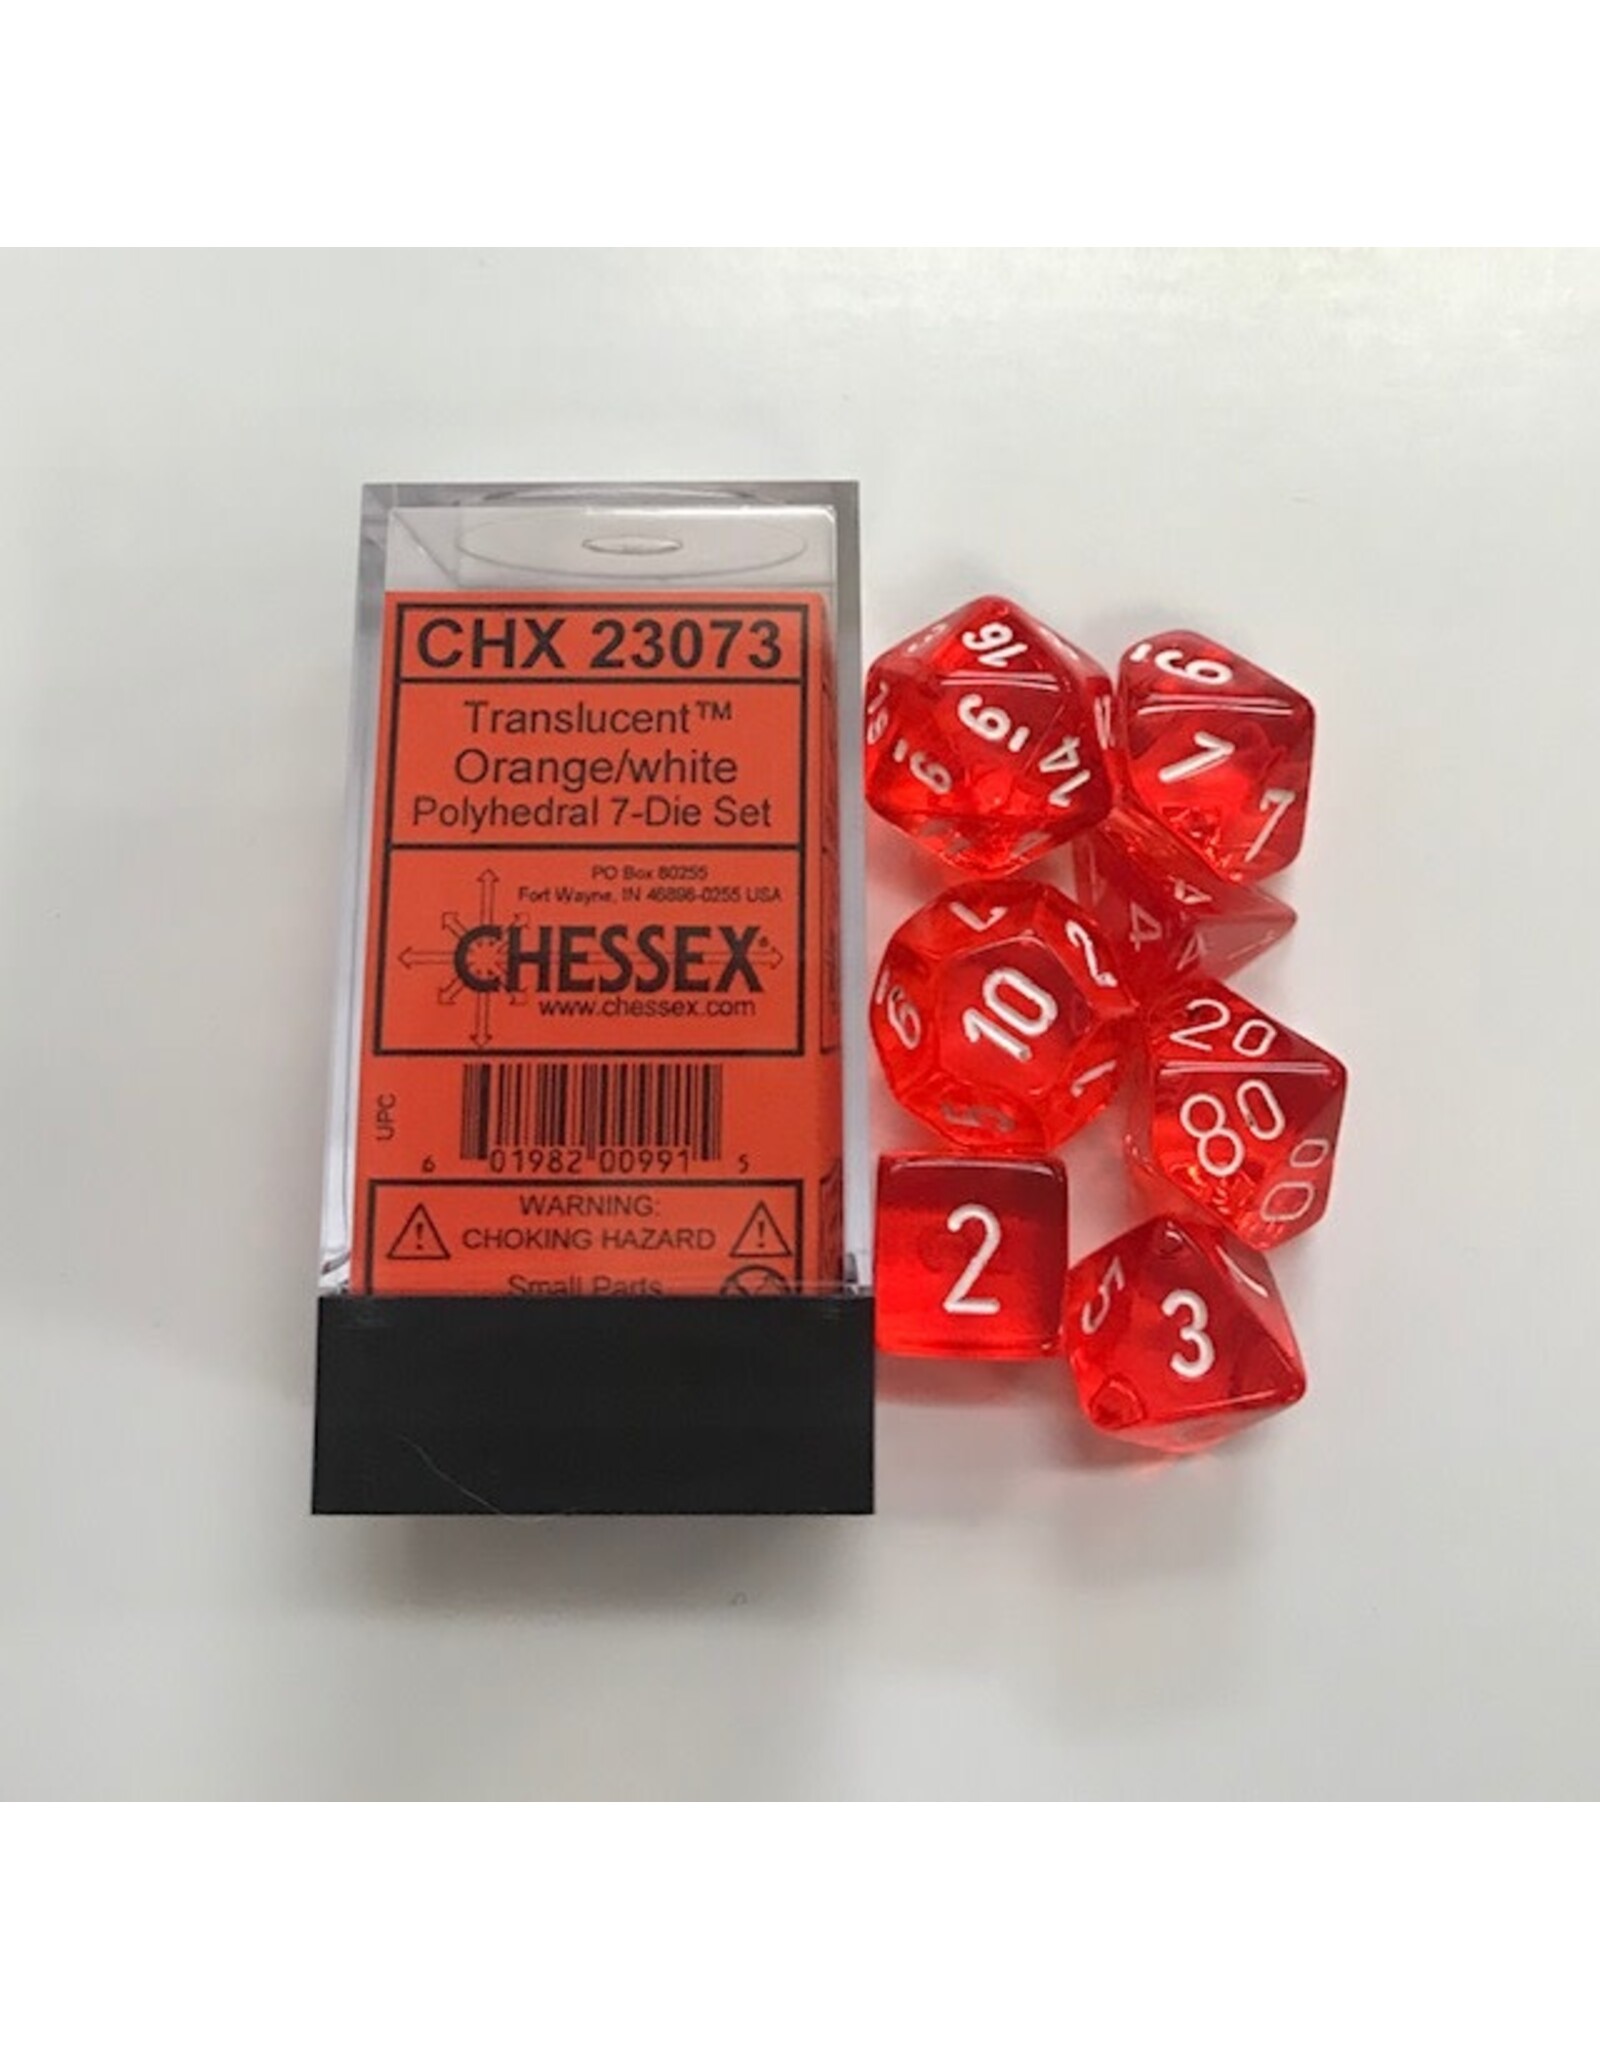 Chessex Orange/ white Translucent Poly 7 dice set